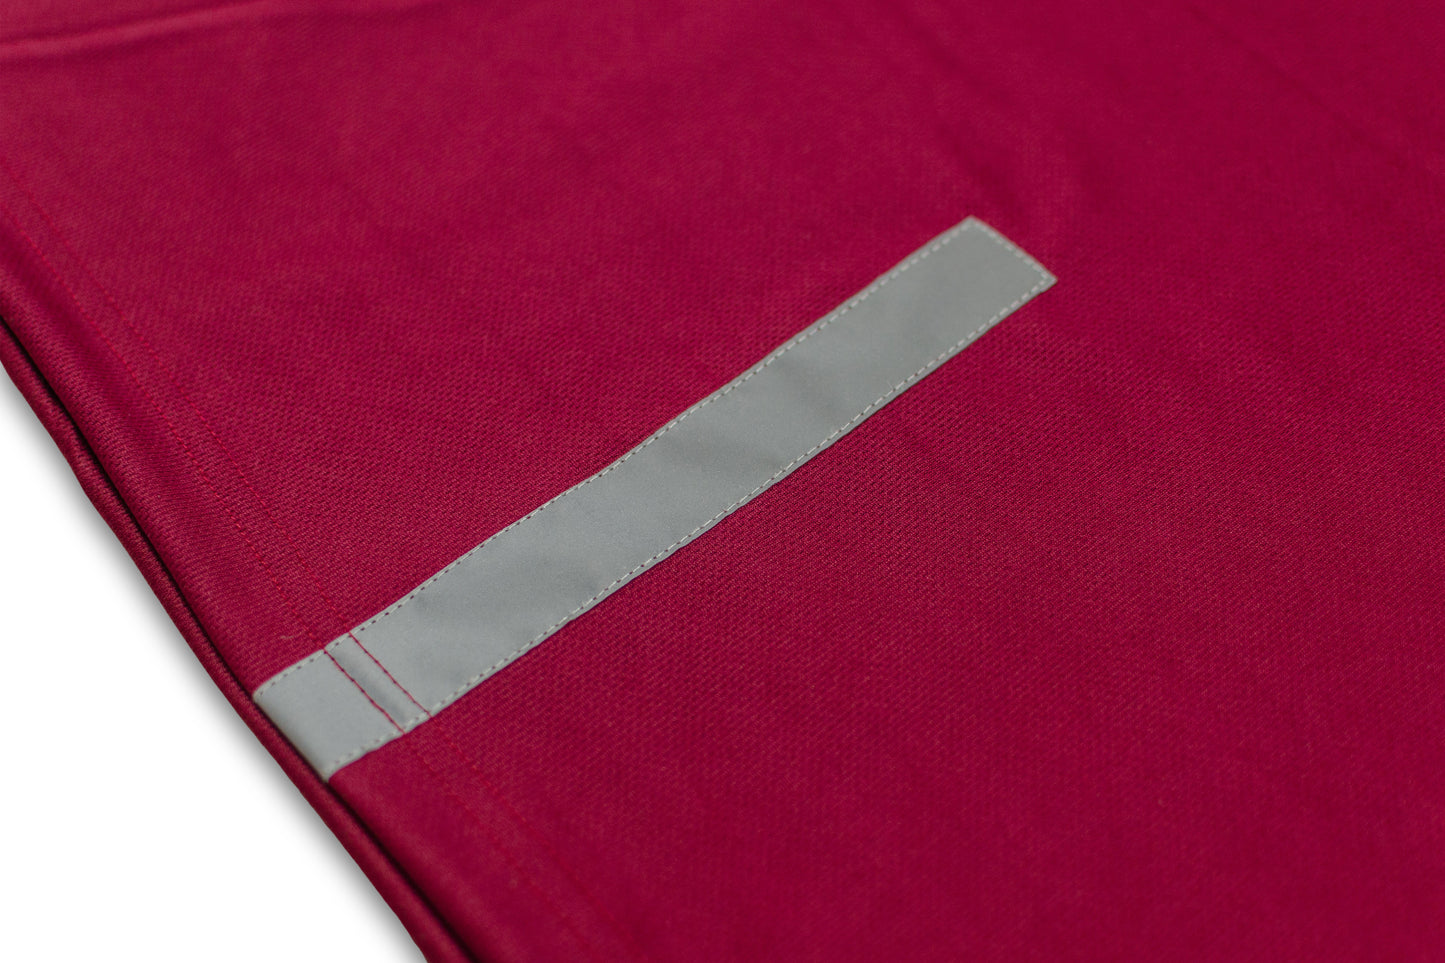 GW Plain Drifit Short-sleeves w/ Reflective Strip (Maroon)